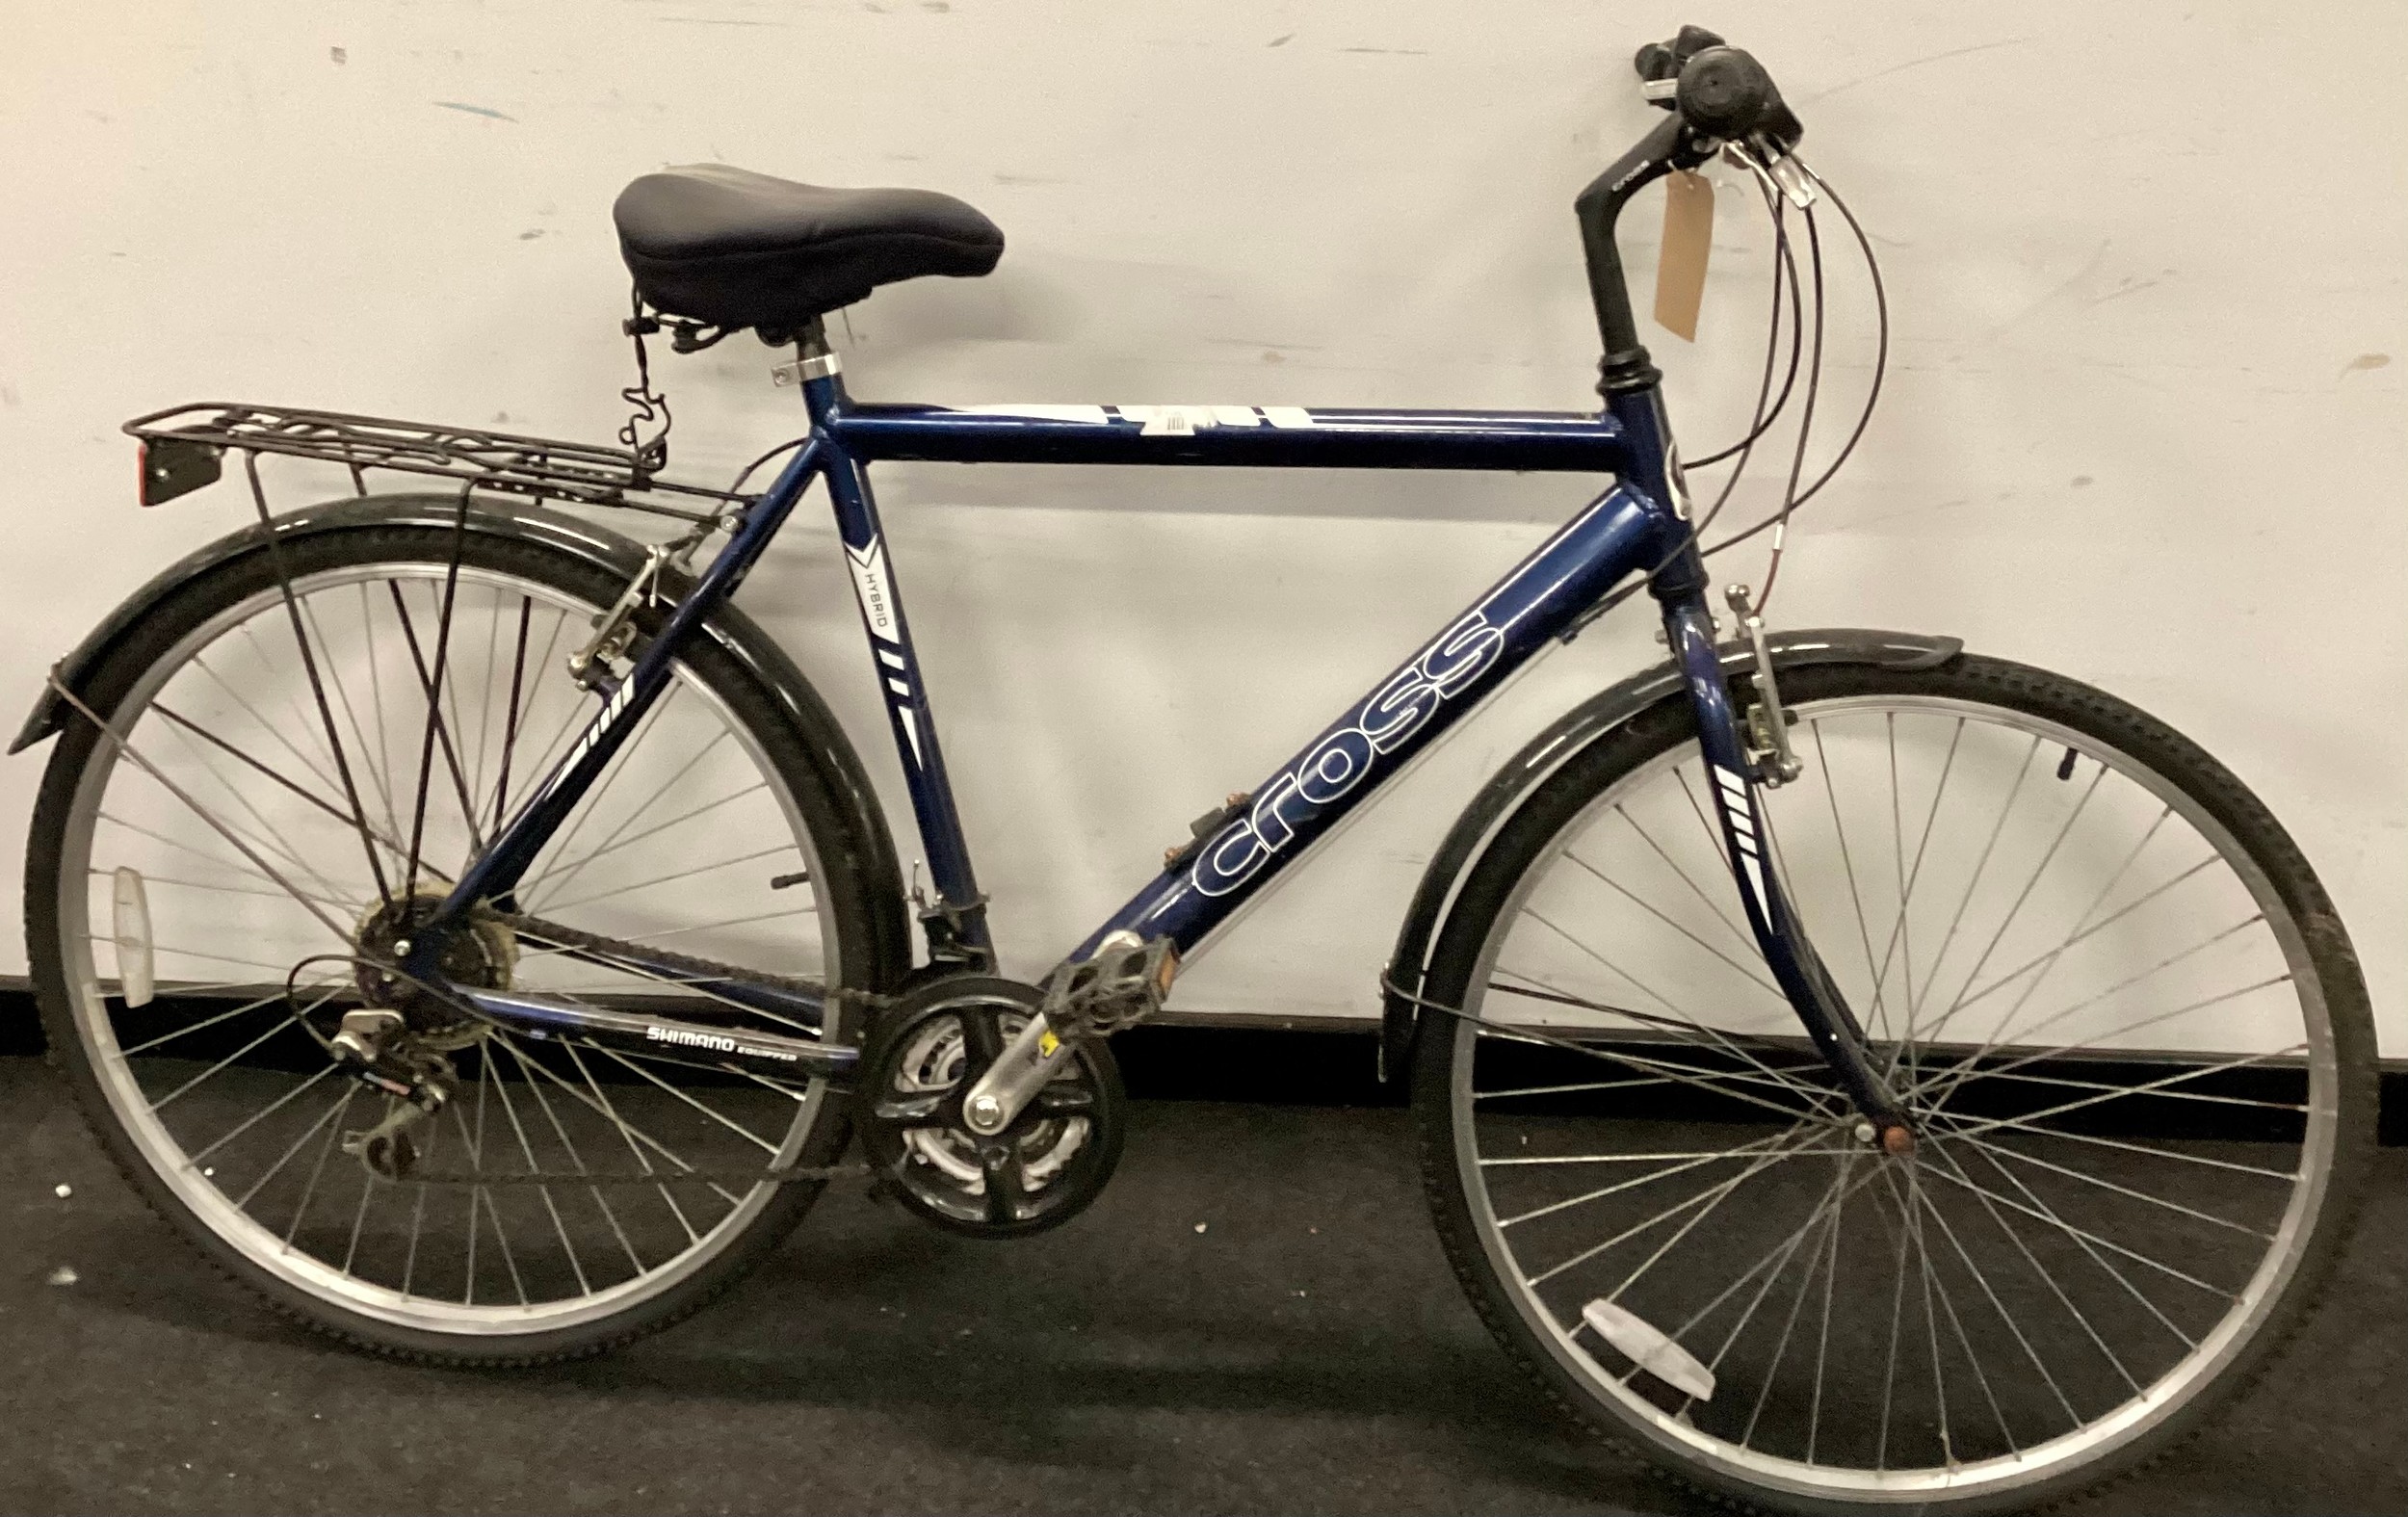 Blue Cross hybrid bicycle 18 gears 21" frame size 28" wheel size (REF 95).